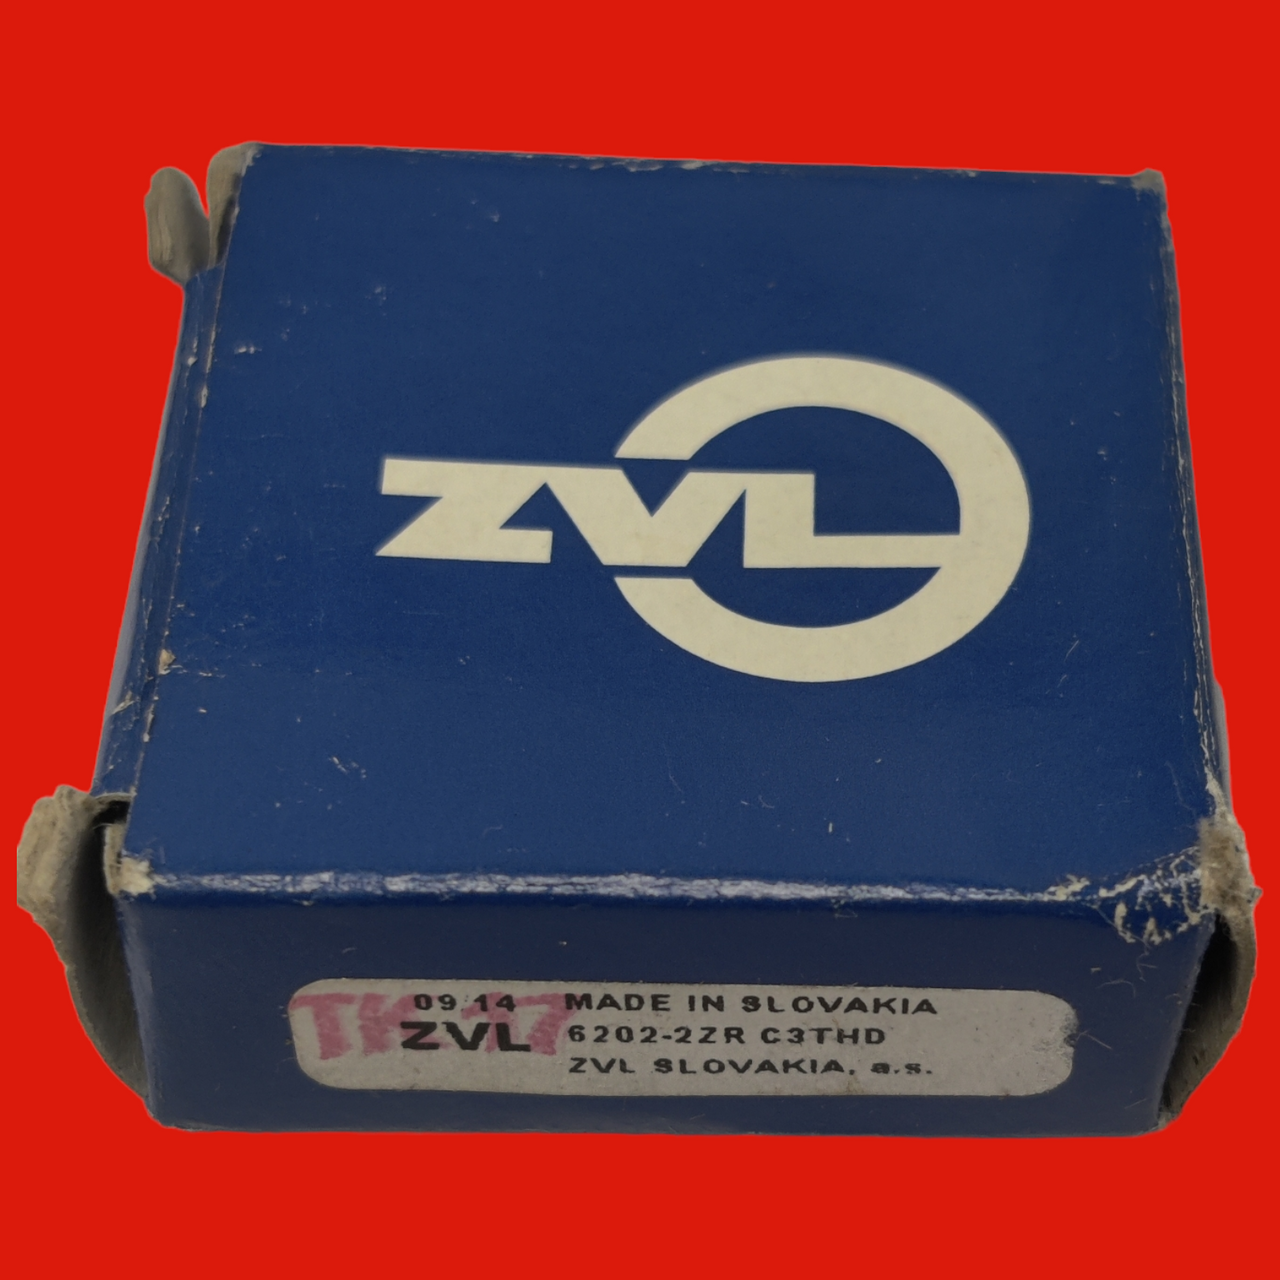 ZVL 6202-2ZR C3THD Single Row Deep Grove Ball Bearing